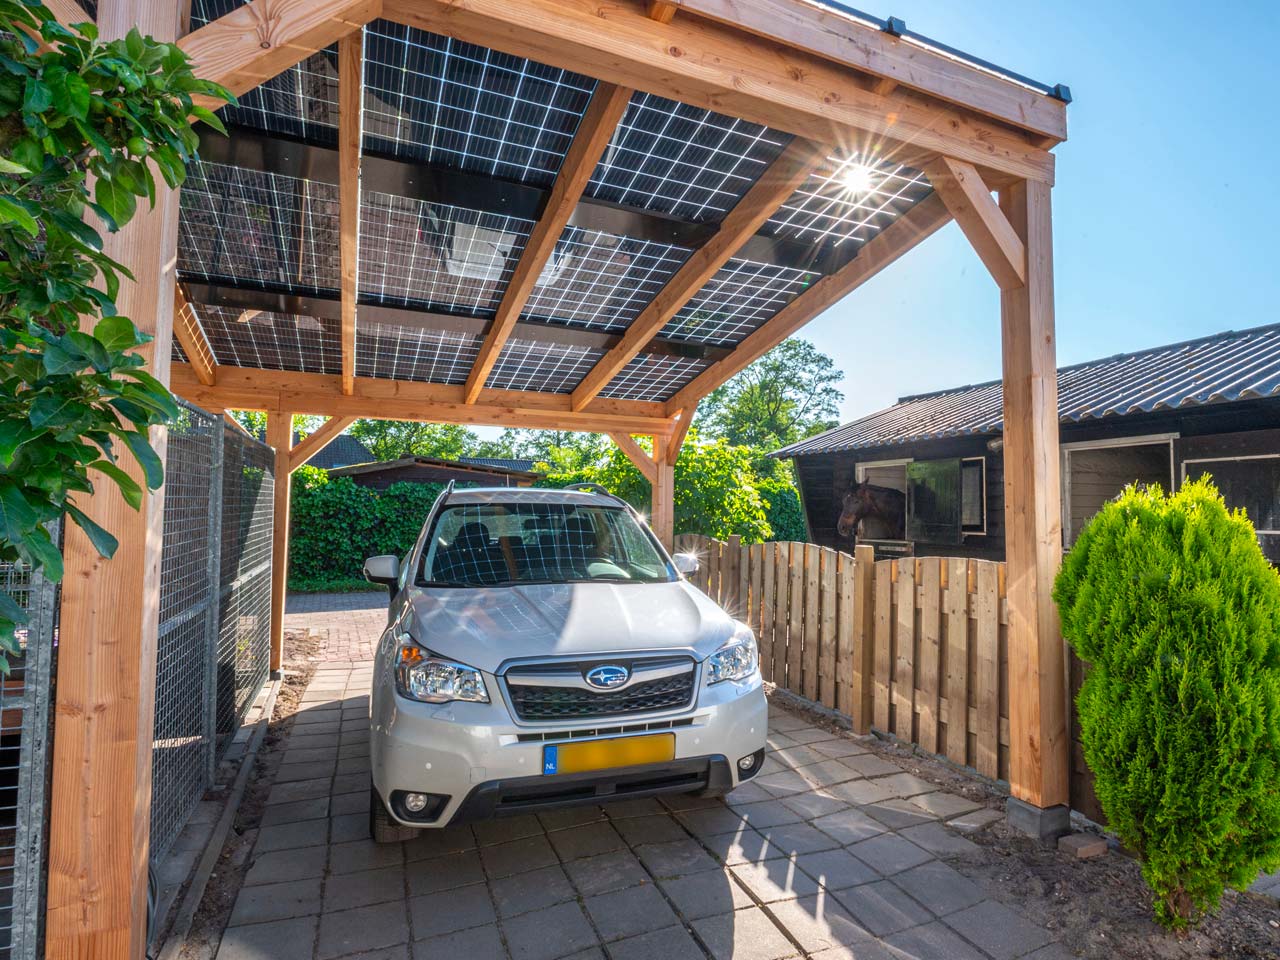 solar-carport-soest-04-project-frelubuitengewoon